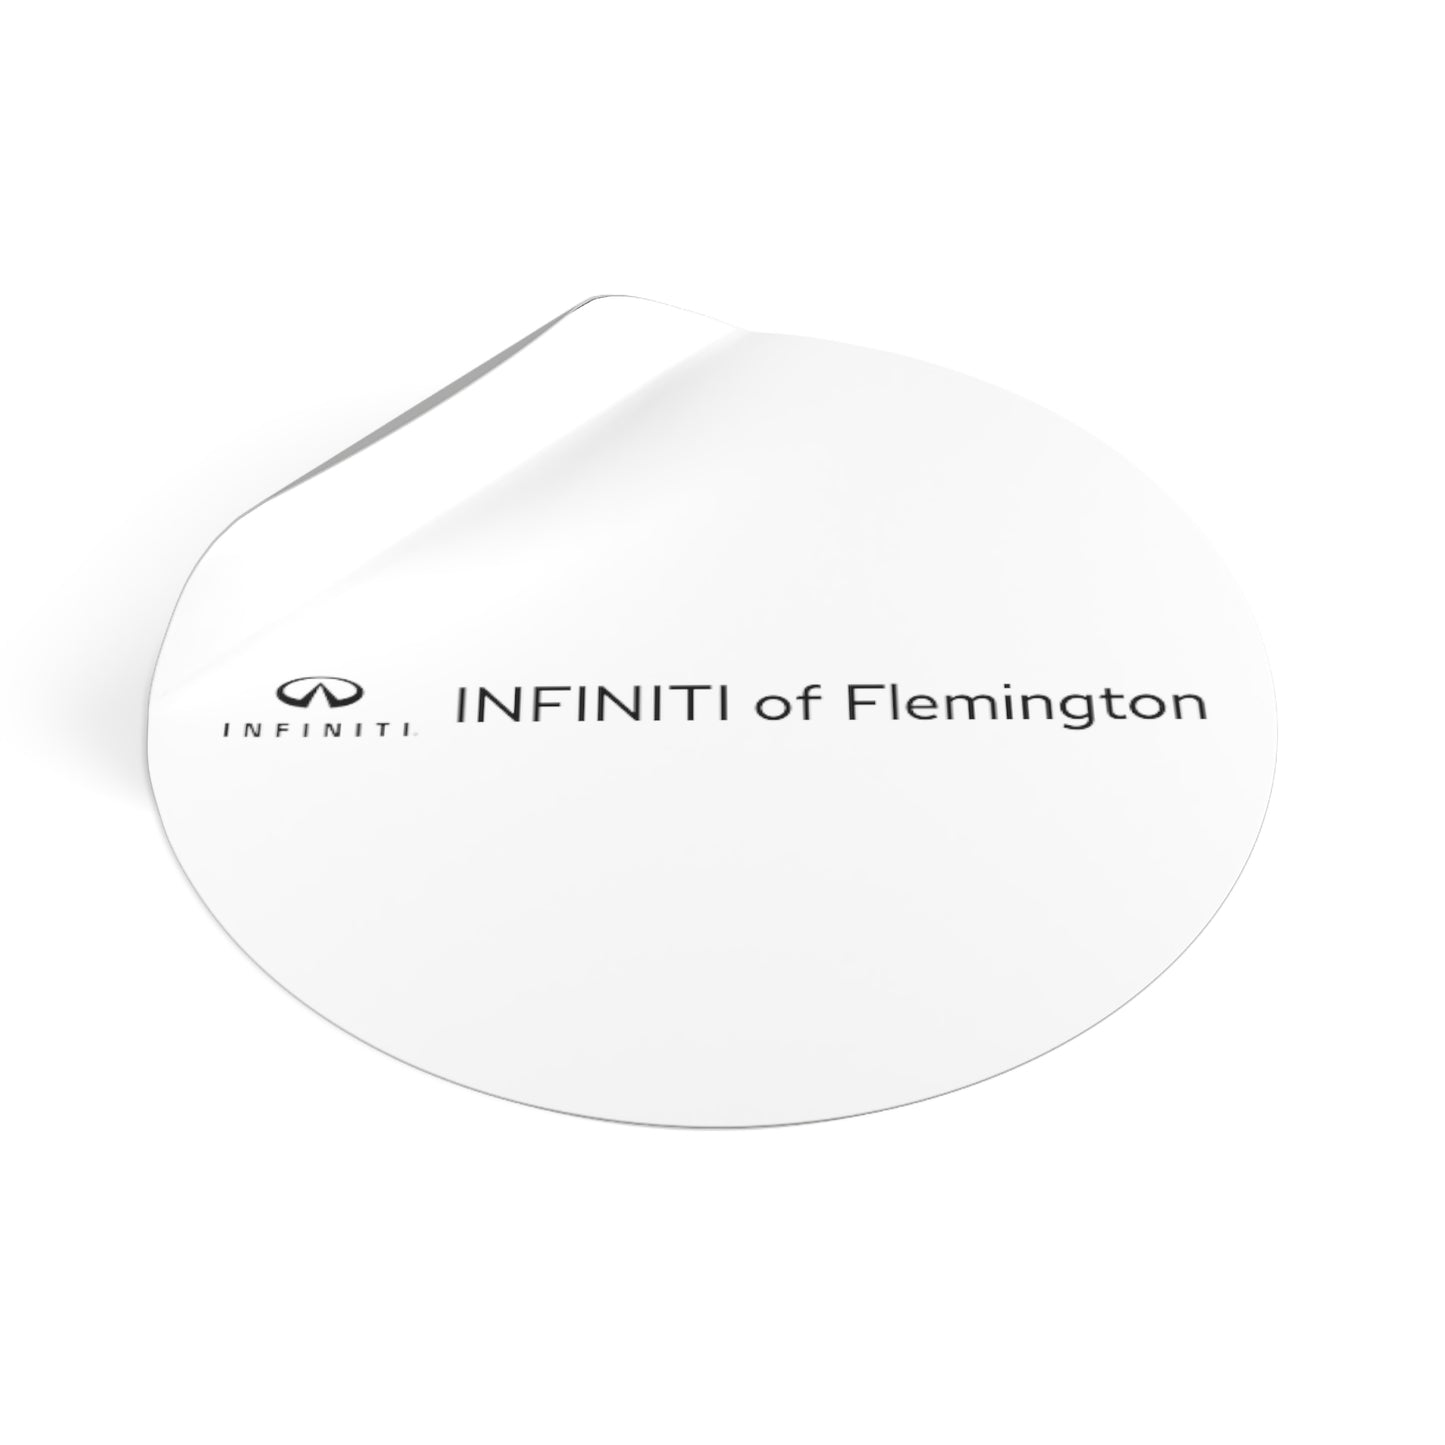 Round Vinyl Stickers - INFINITI of Flemington